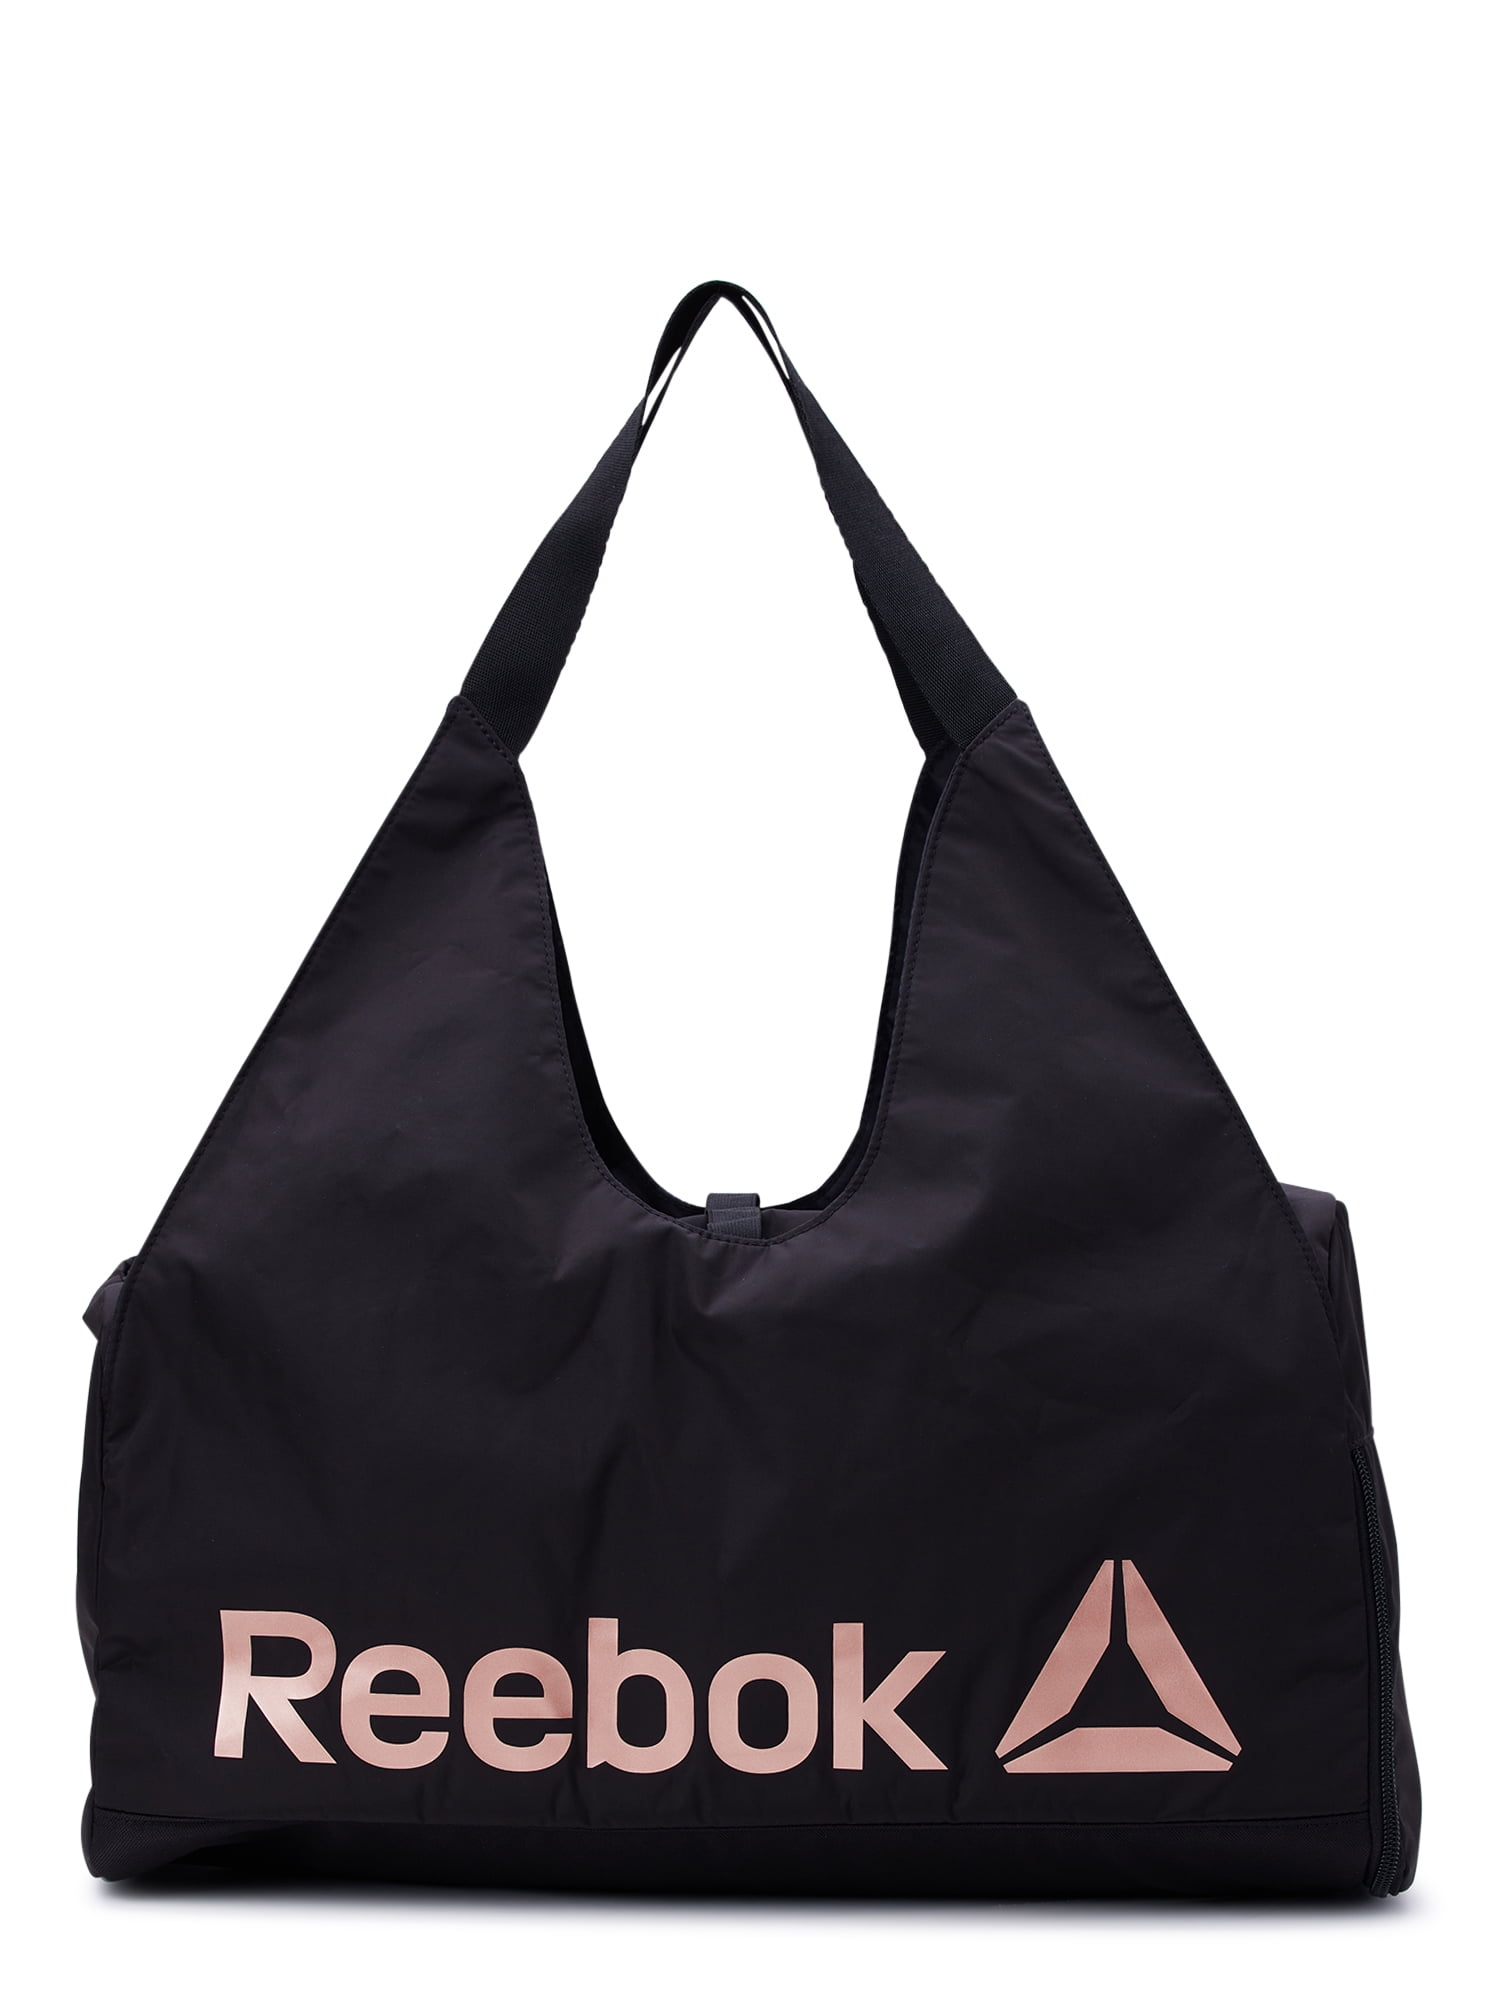 Reebok Women's Lilith Duffle Tote Bag, Black - Walmart.com